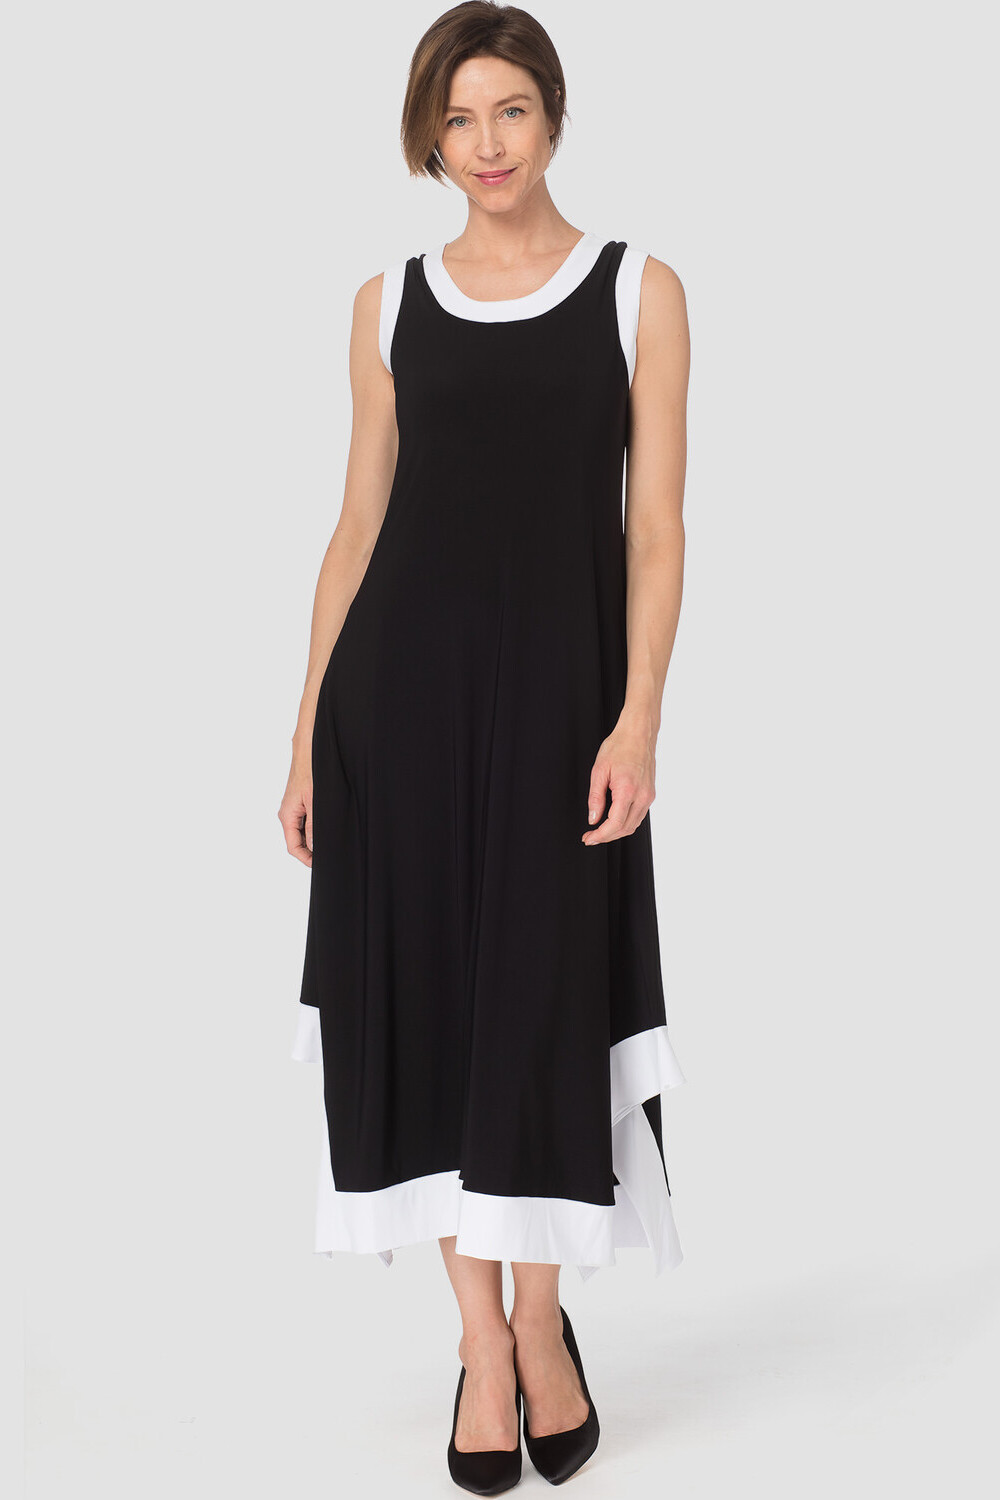 Joseph Ribkoff dress style 182024. Black/white